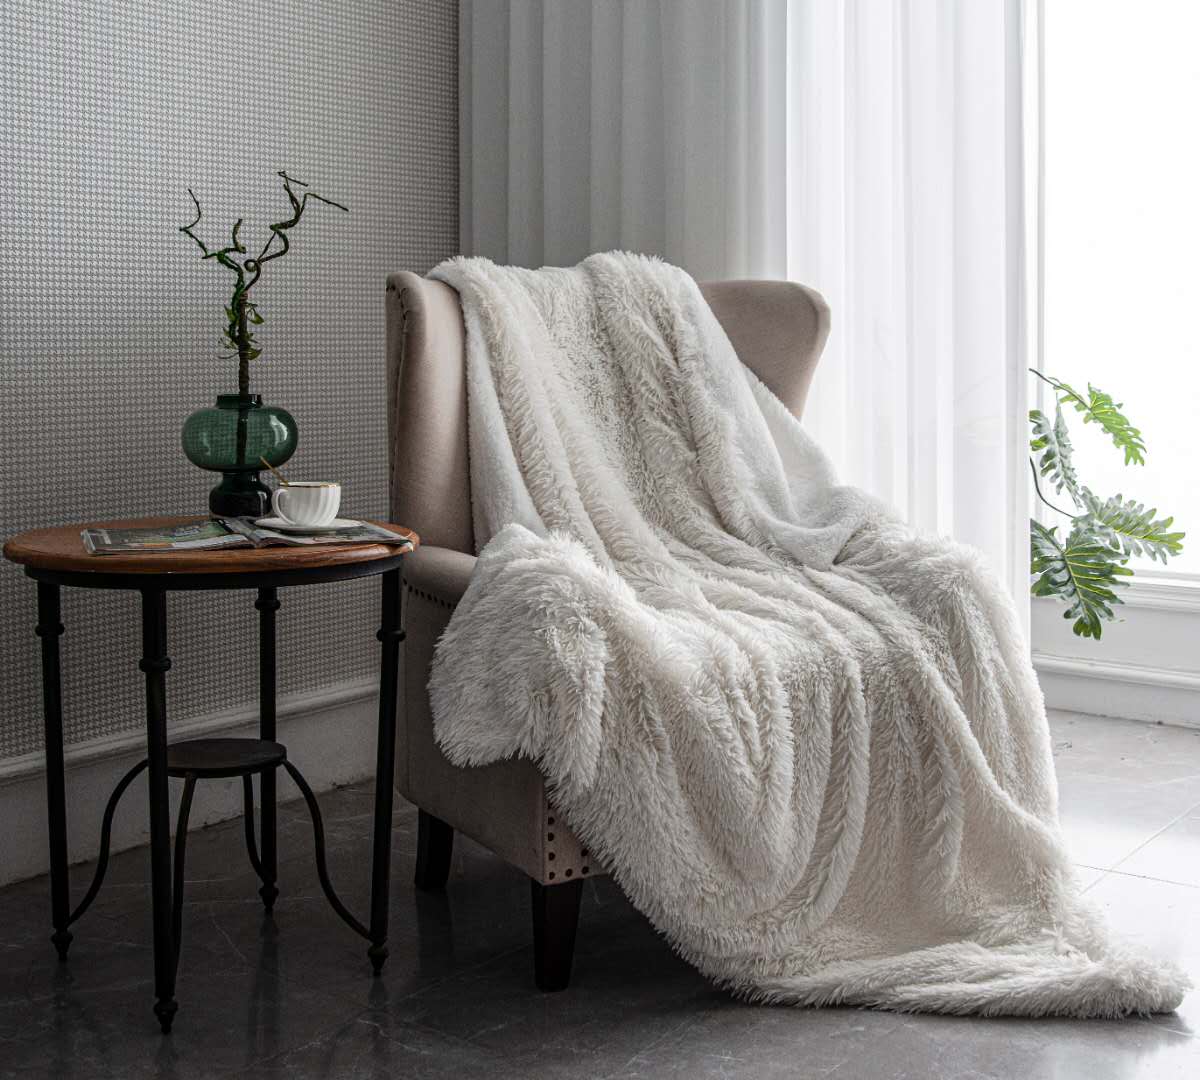 Off White Luxury Super Soft Fluffy Fur Throw Blanket Large Sofa Bed Warm Cosy Fleece Blanket 